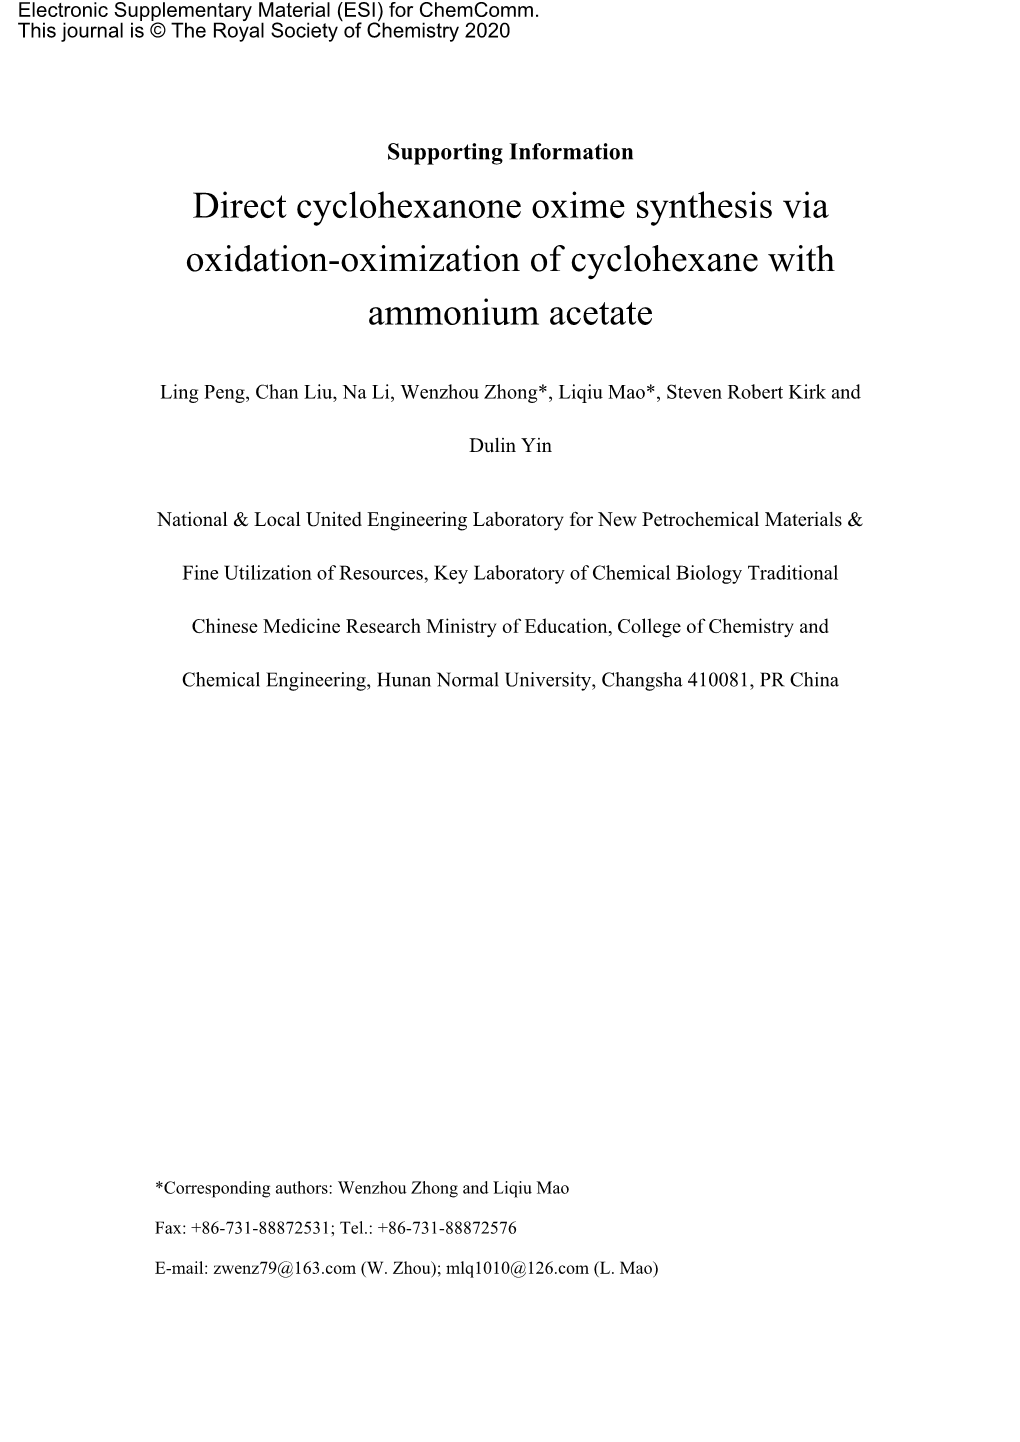 Direct Cyclohexanone Oxime Synthesis Via Oxidation-Oximization of Cyclohexane with Ammonium Acetate